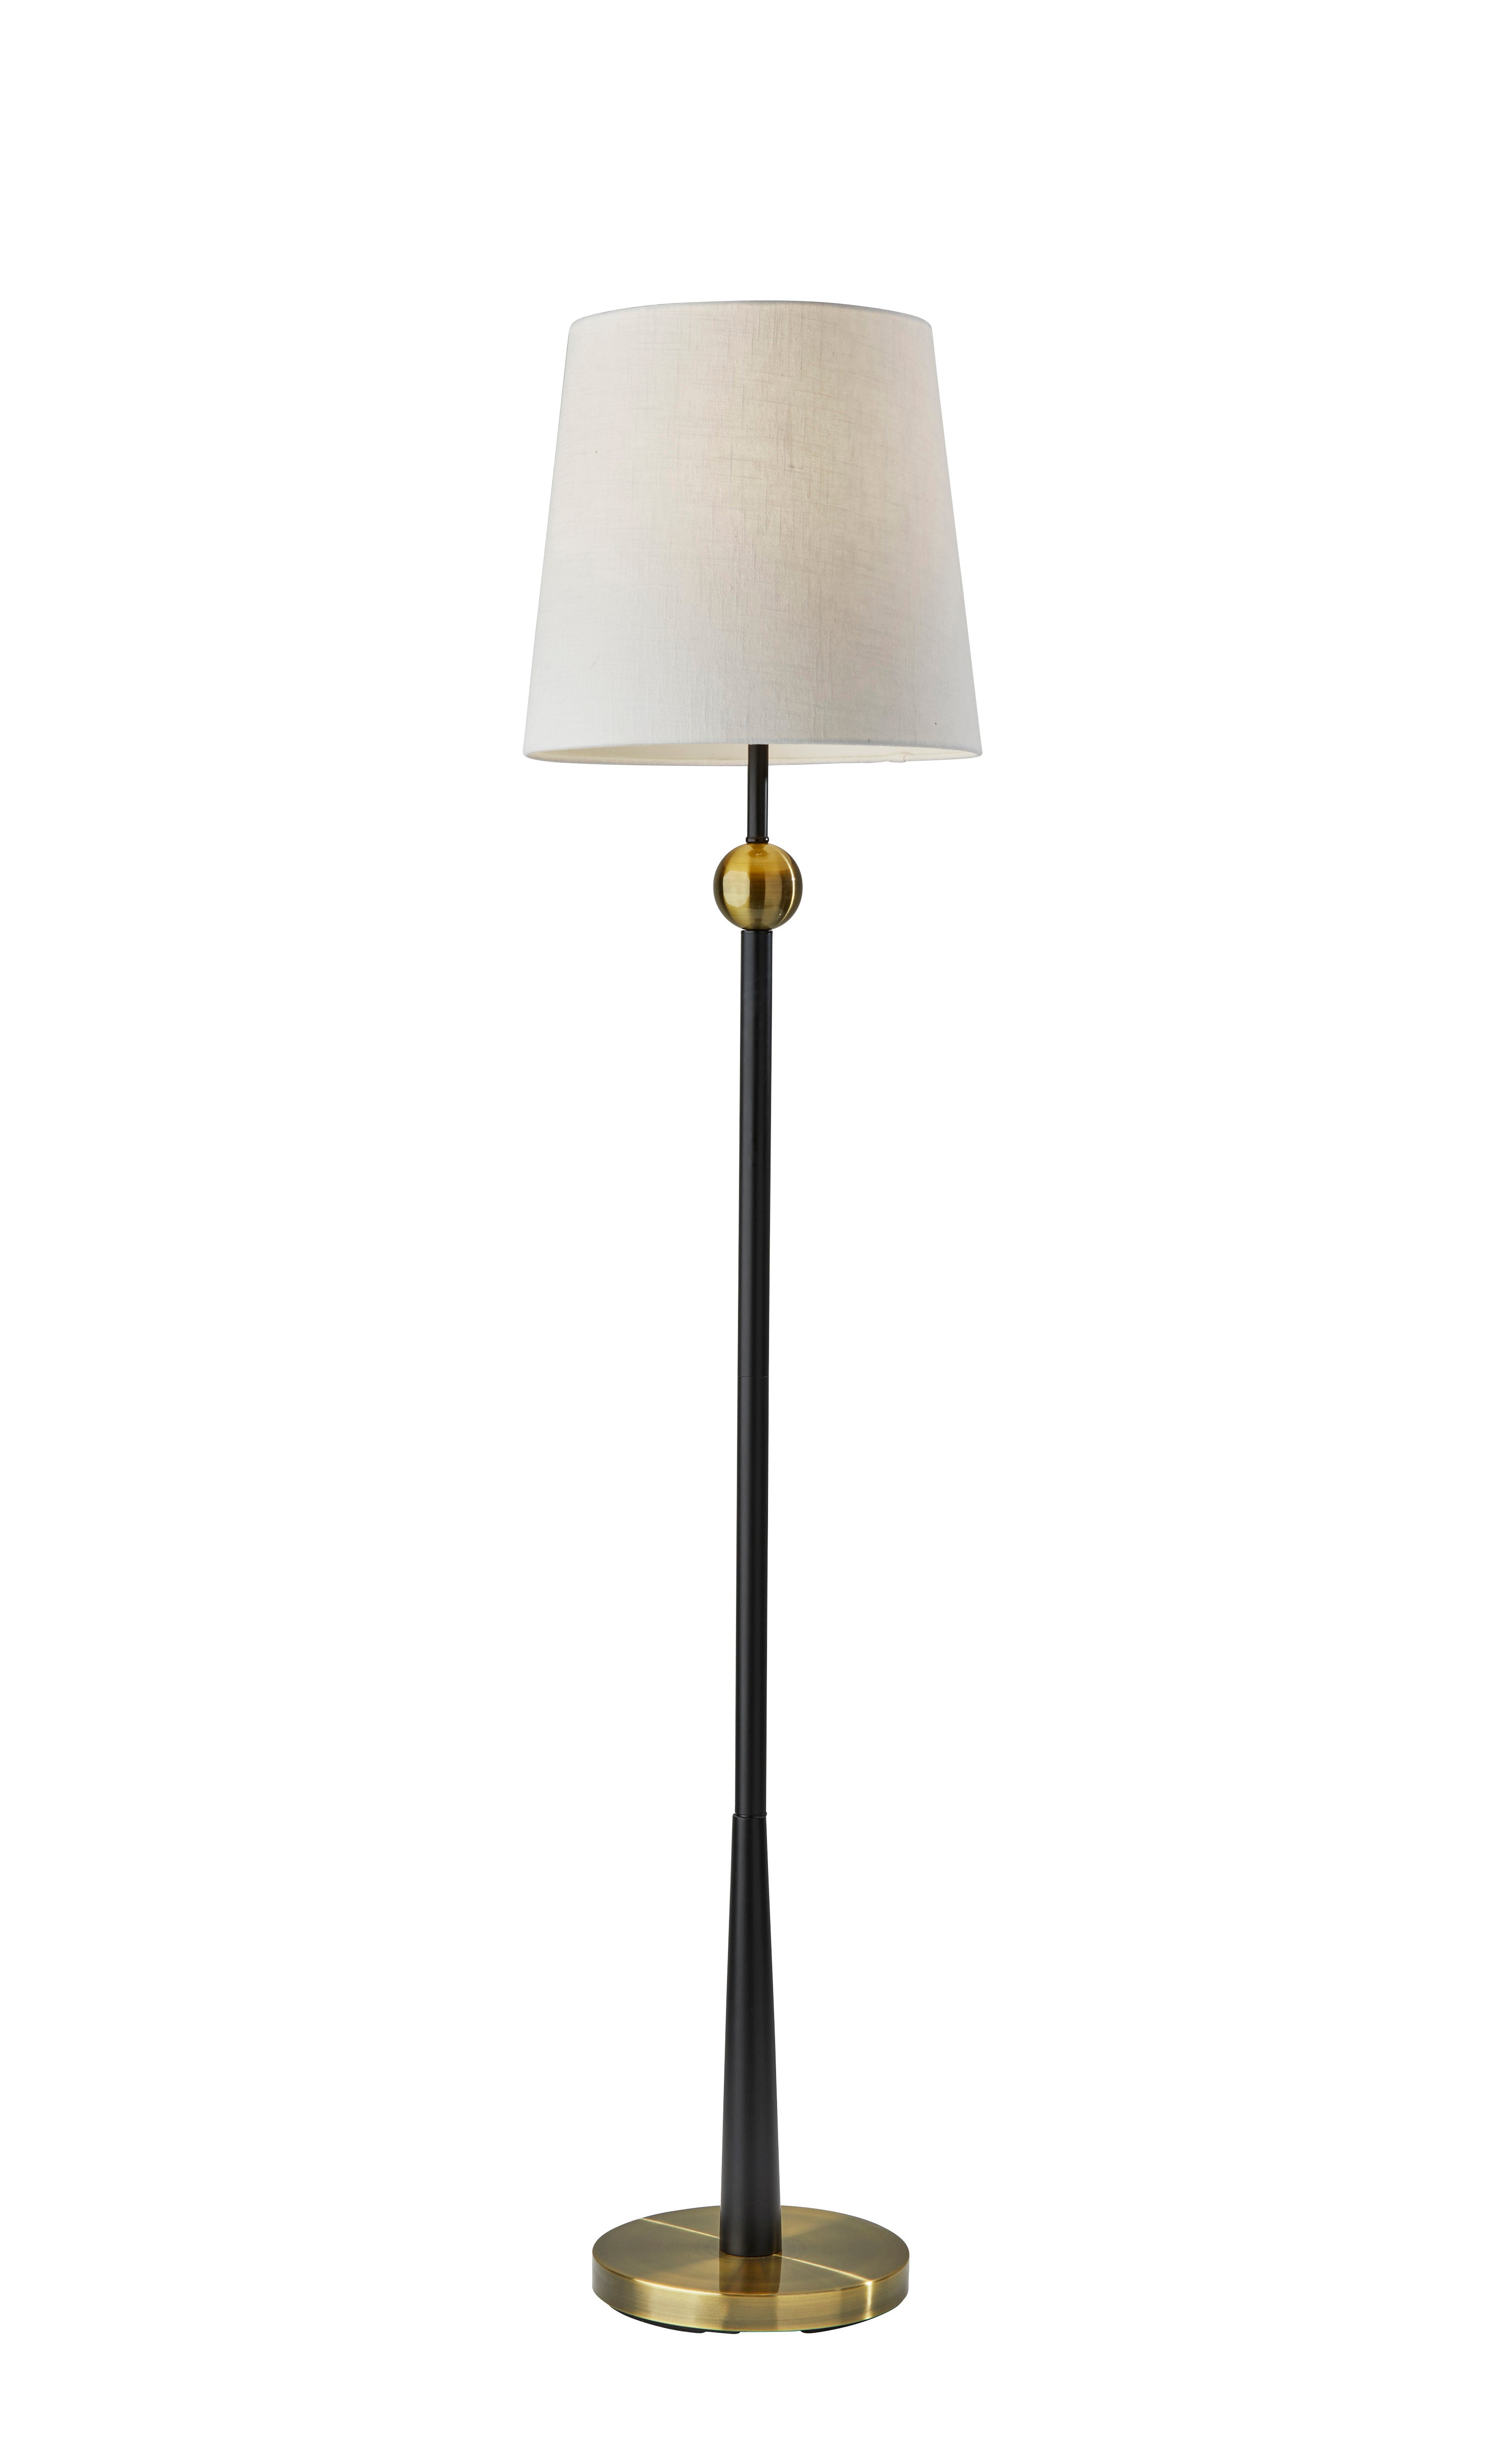 FRANCIS Floor lamp Black, Gold - 1575-01 | ADESSO